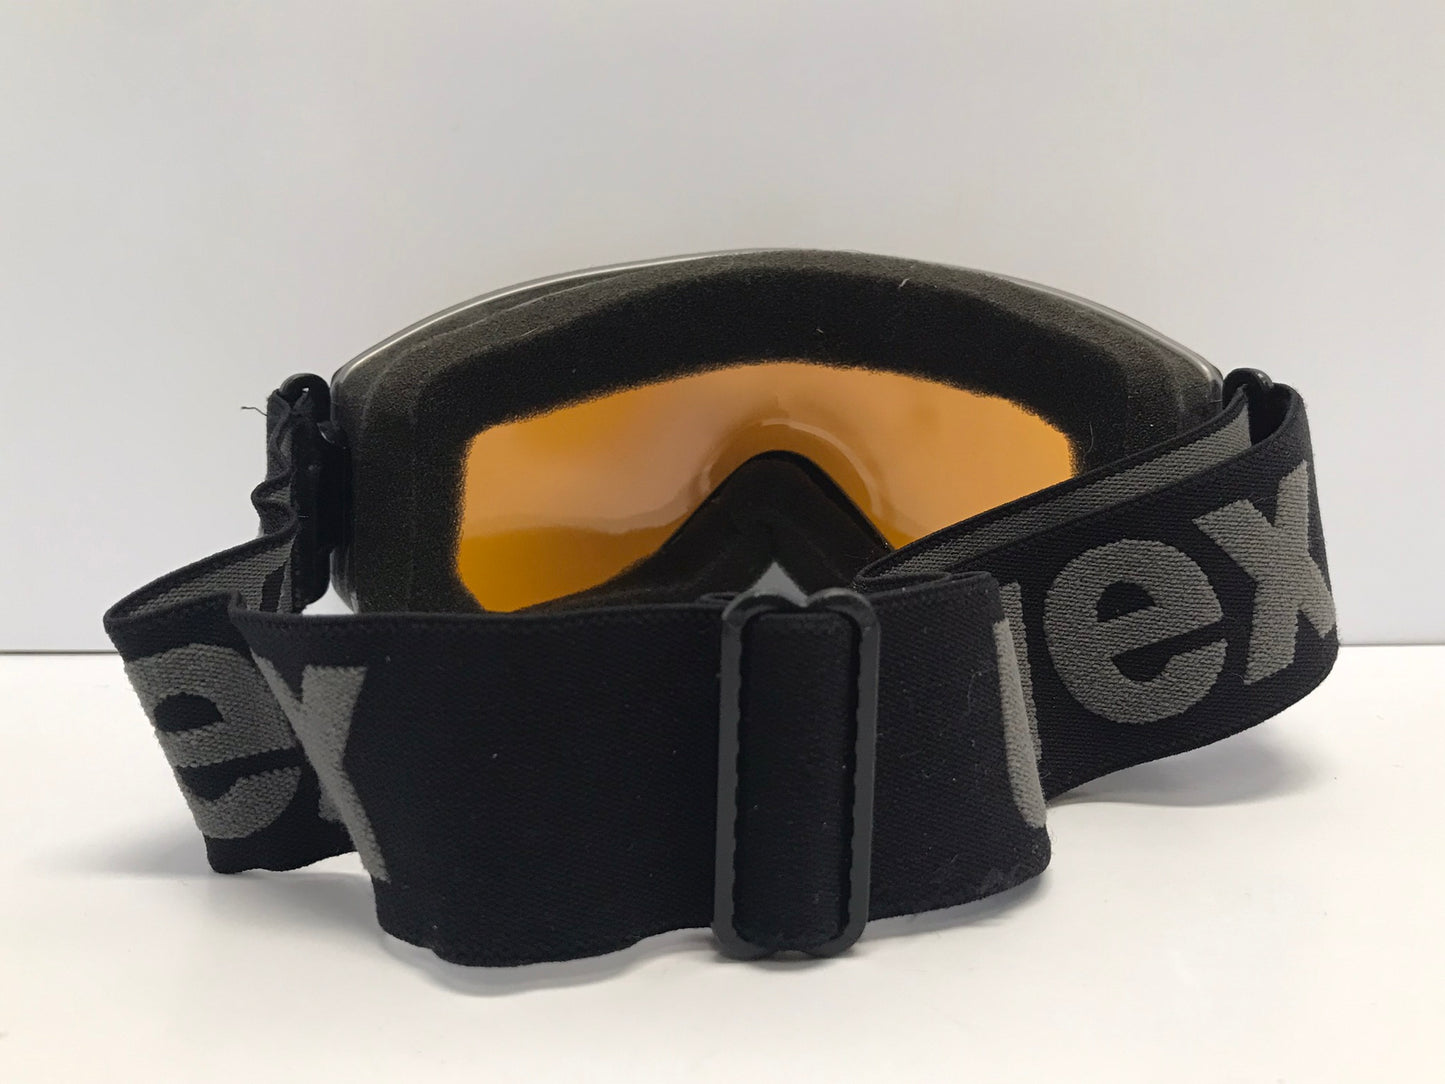 Ski Goggles Adult Large Uvex Double Lense Supravision Grey Orange Lenses